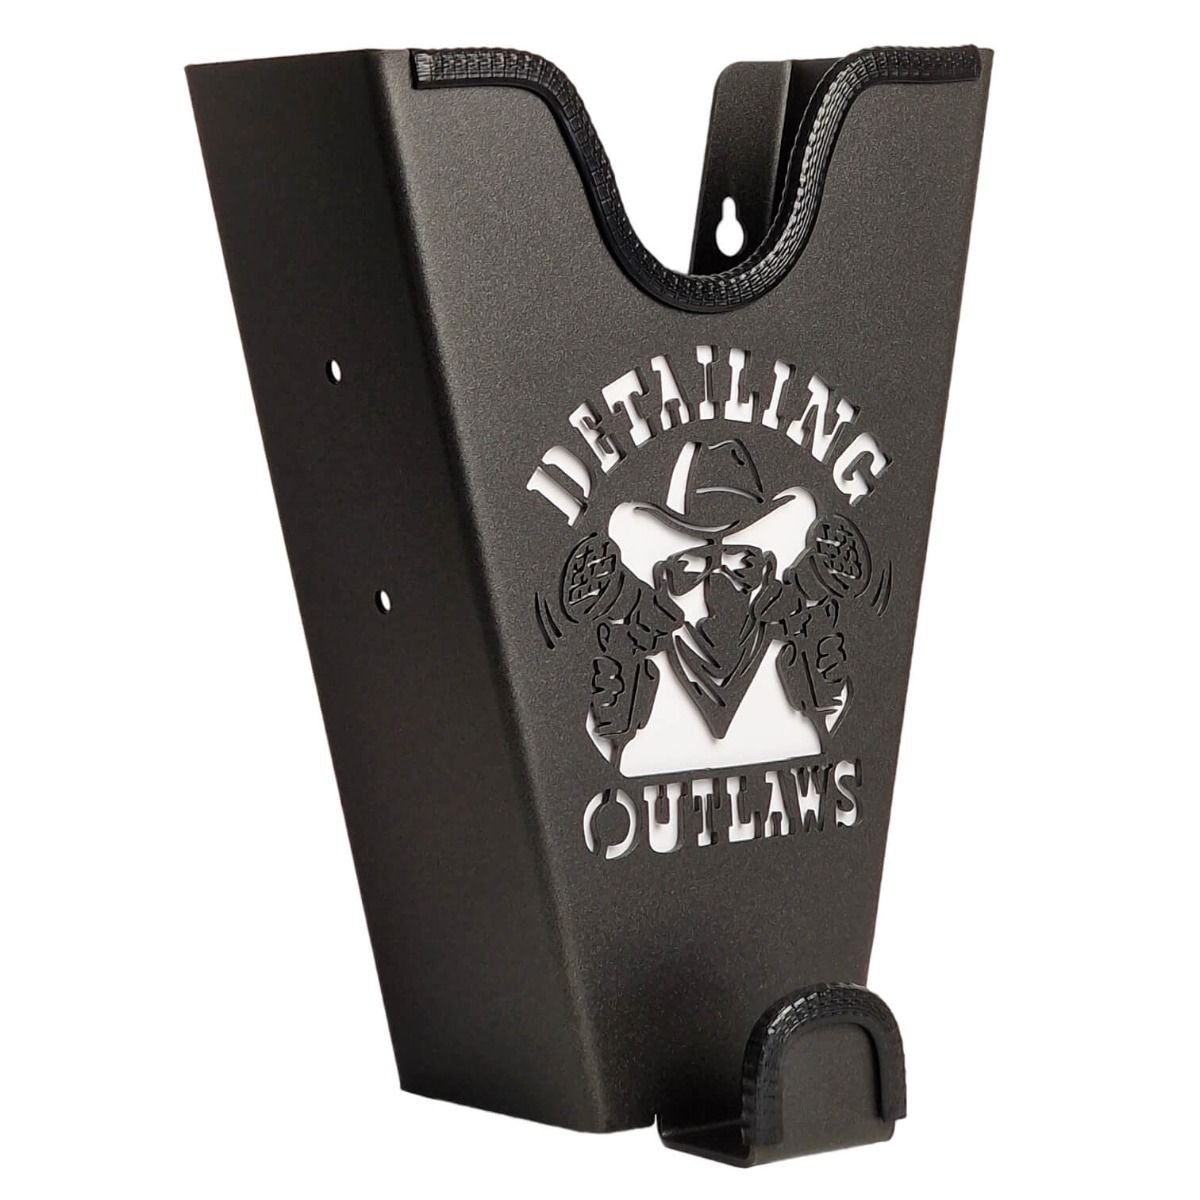 Detailing Outlaws Buffaway Machine Hanger, Charcoal/ Wit